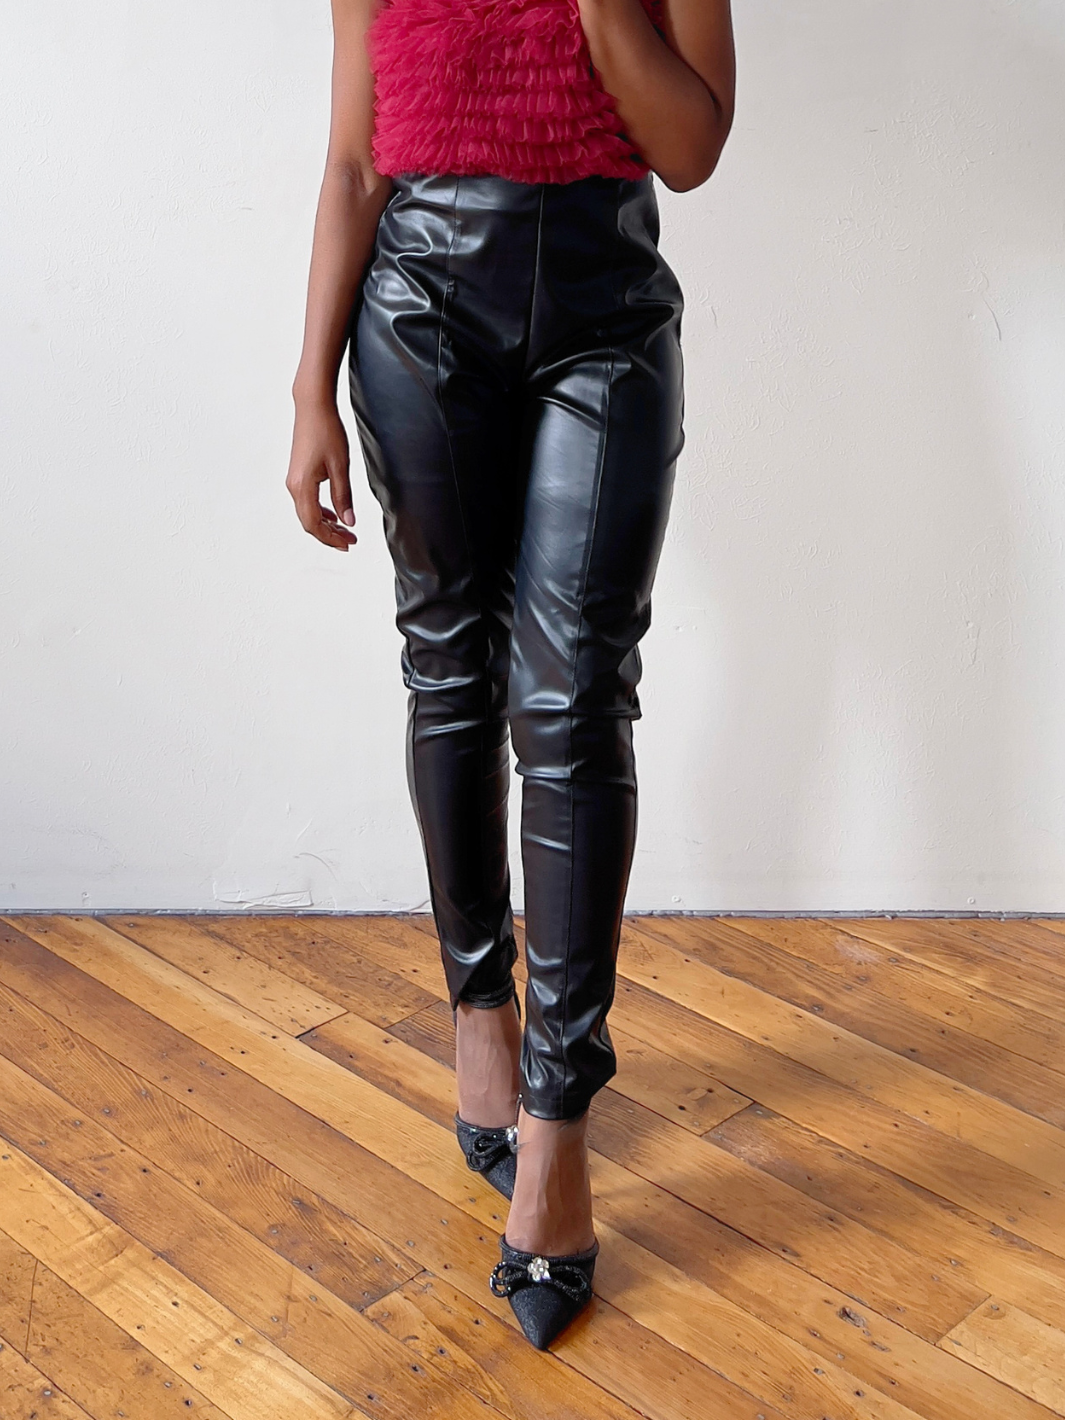 Top Bae - High Waist Faux Leather Pants with Pockets - Shiny